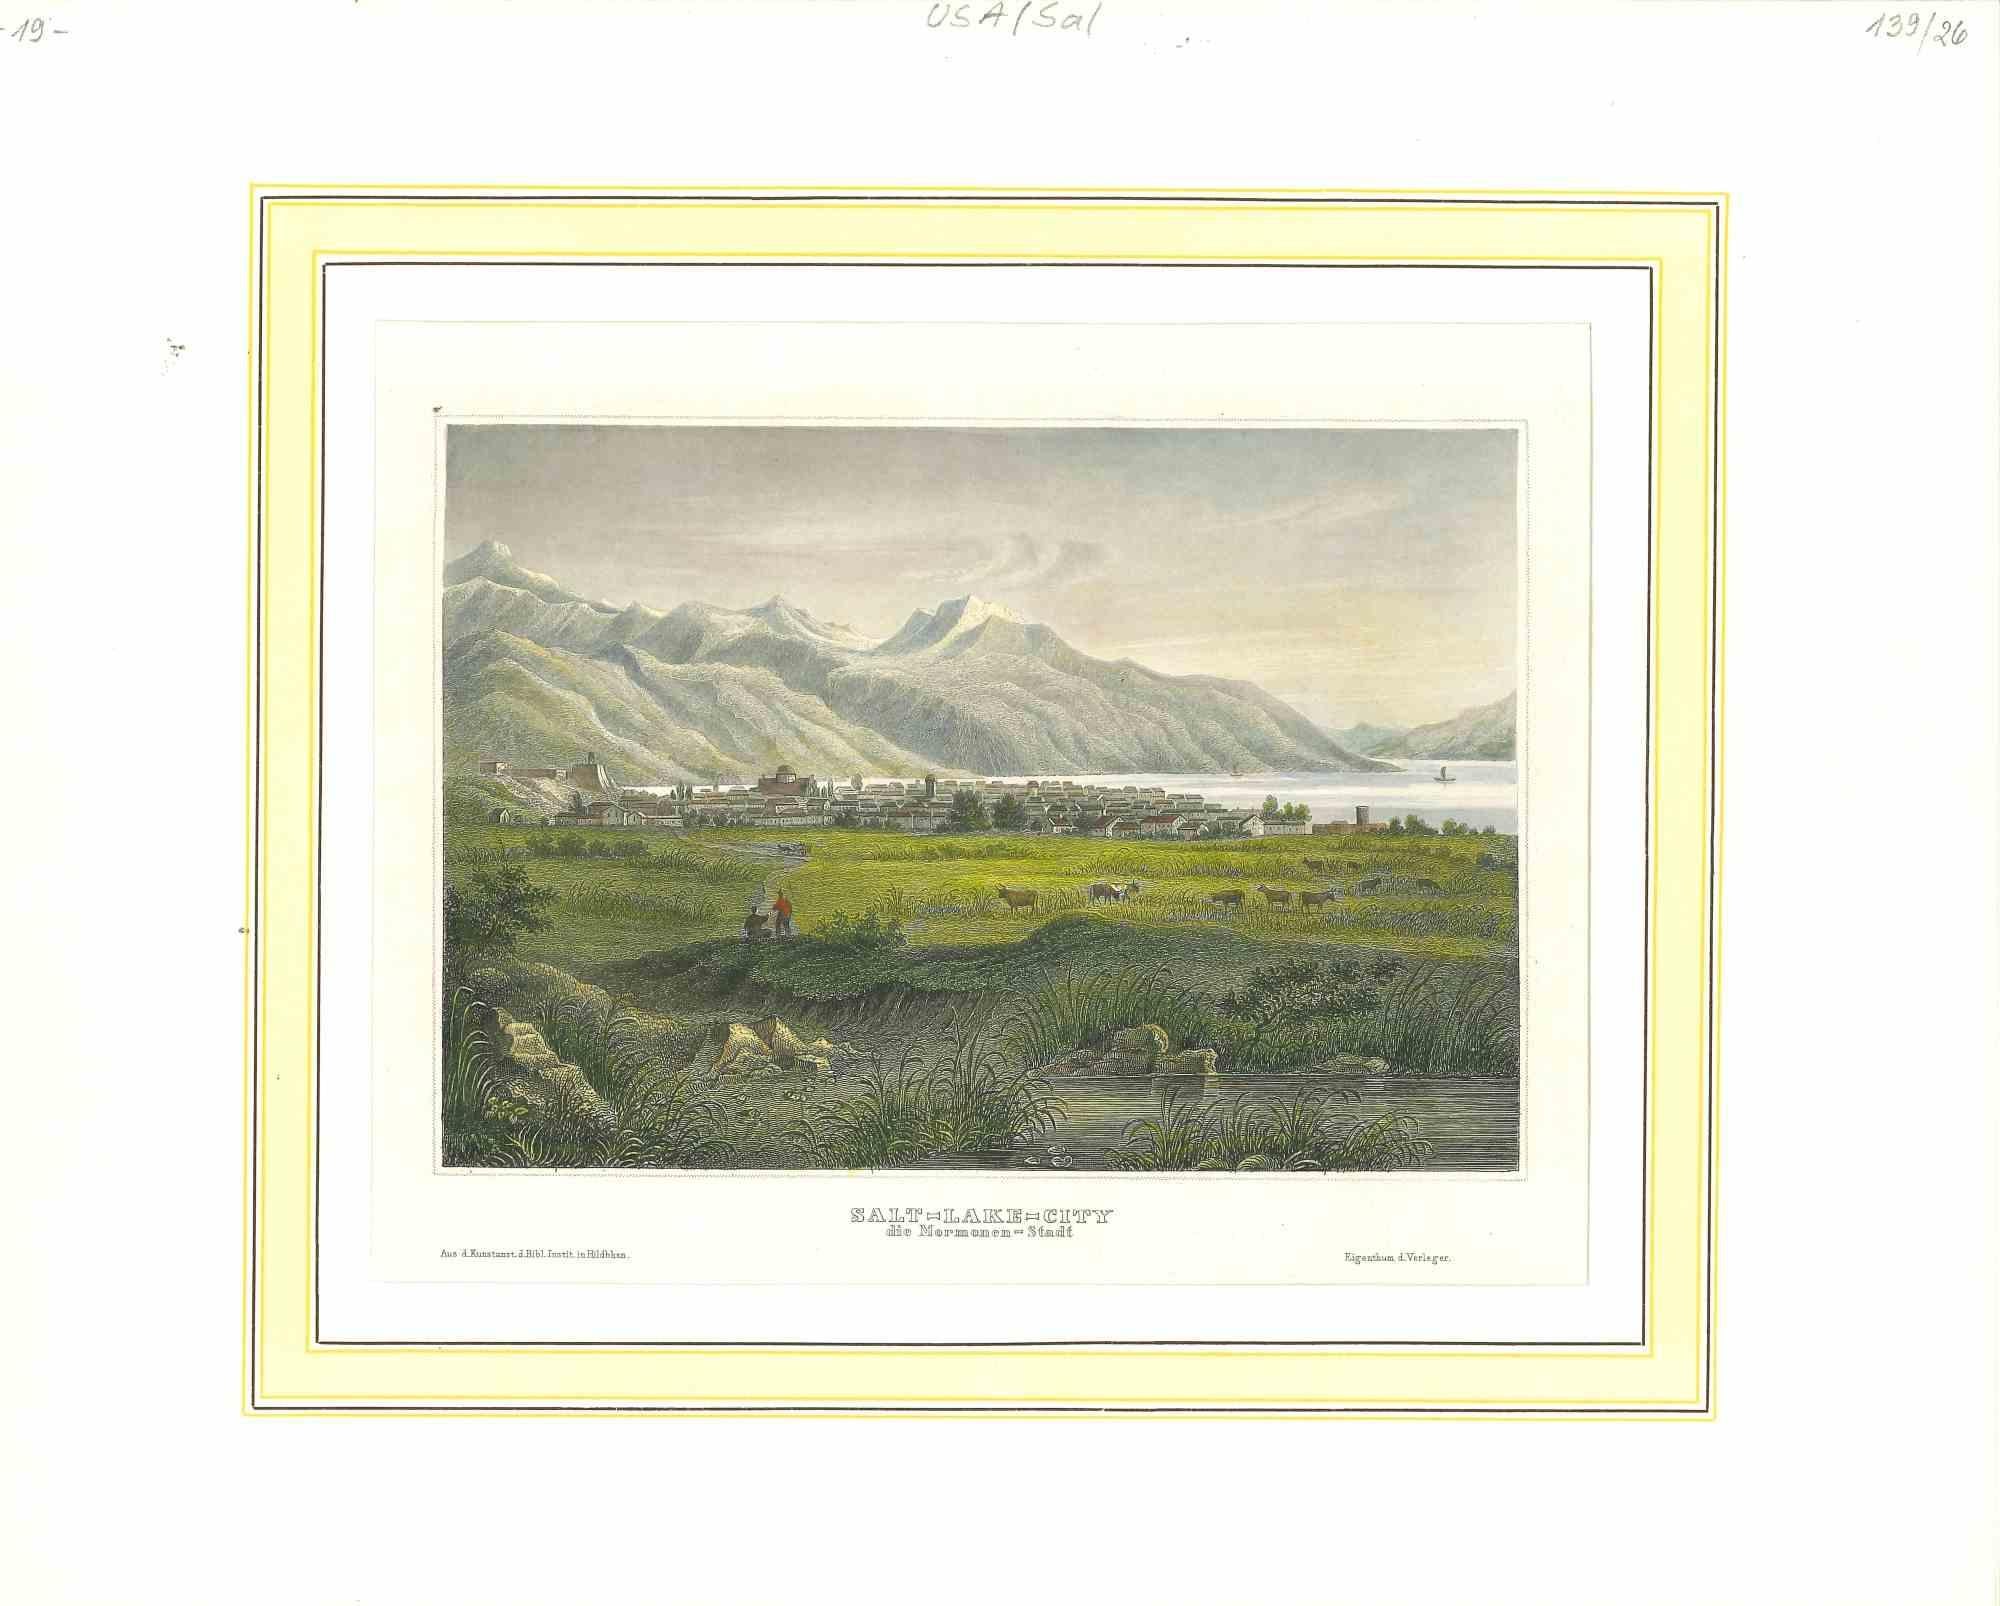 Unknown Figurative Print - Ancient View of Salt Lake City - Original Lithograph - 1850s